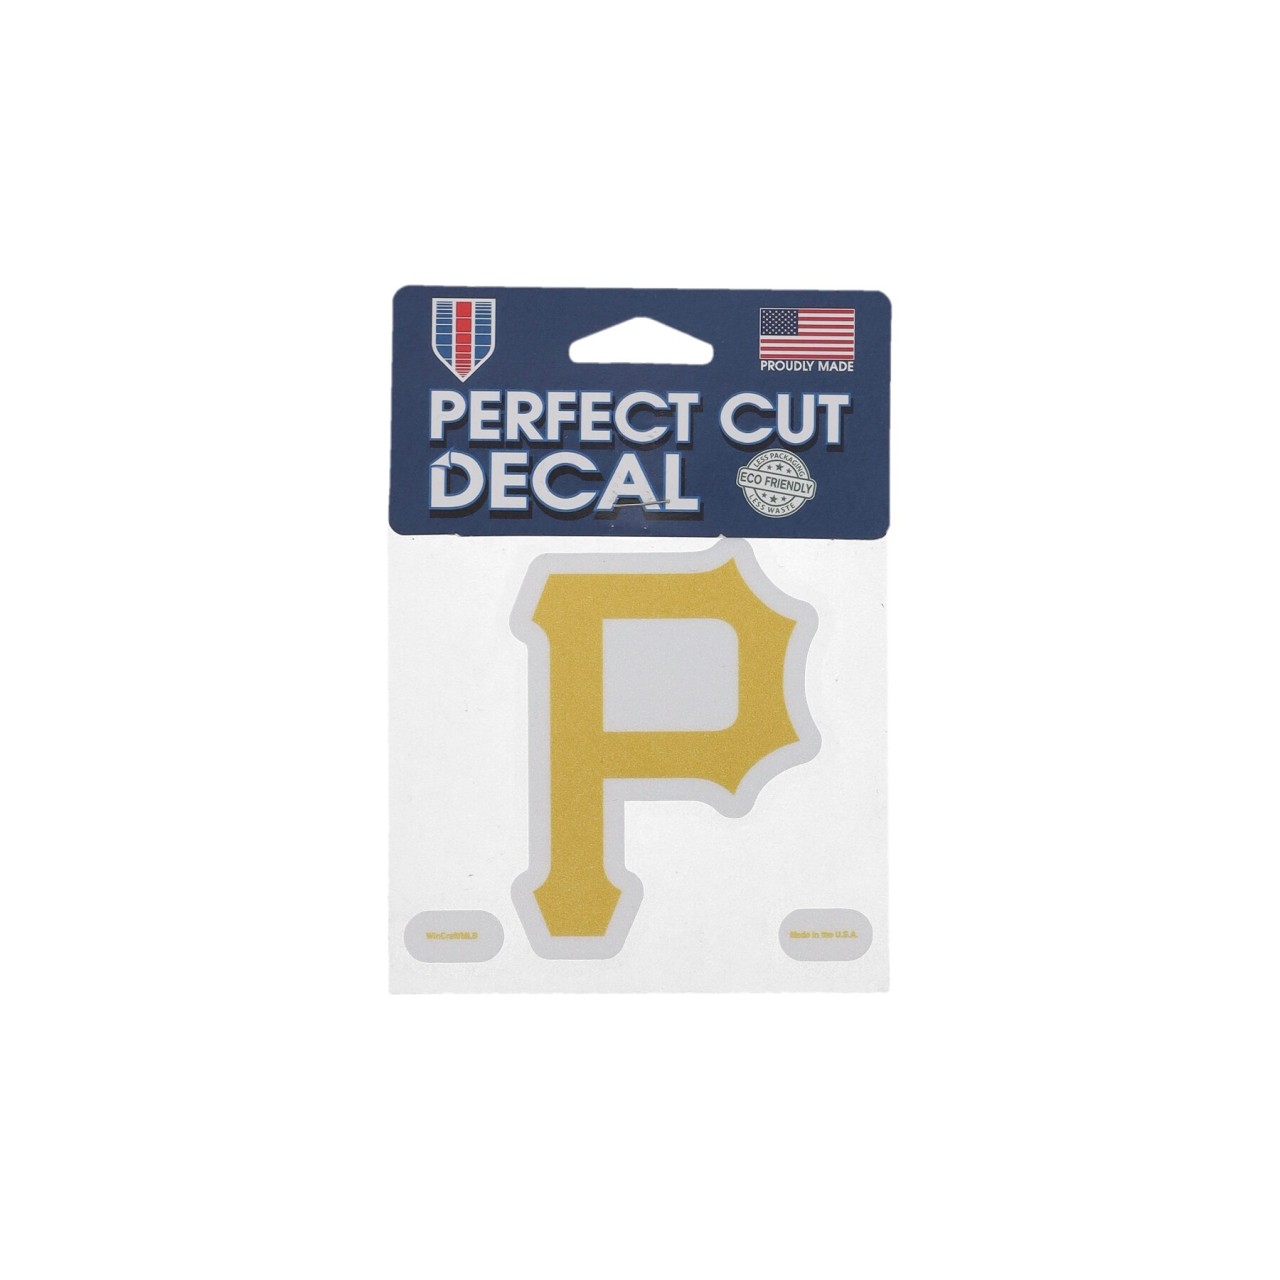 WINCRAFT MLB 4 x 4” PERFECT CUT DECAL PITPIR 93912010